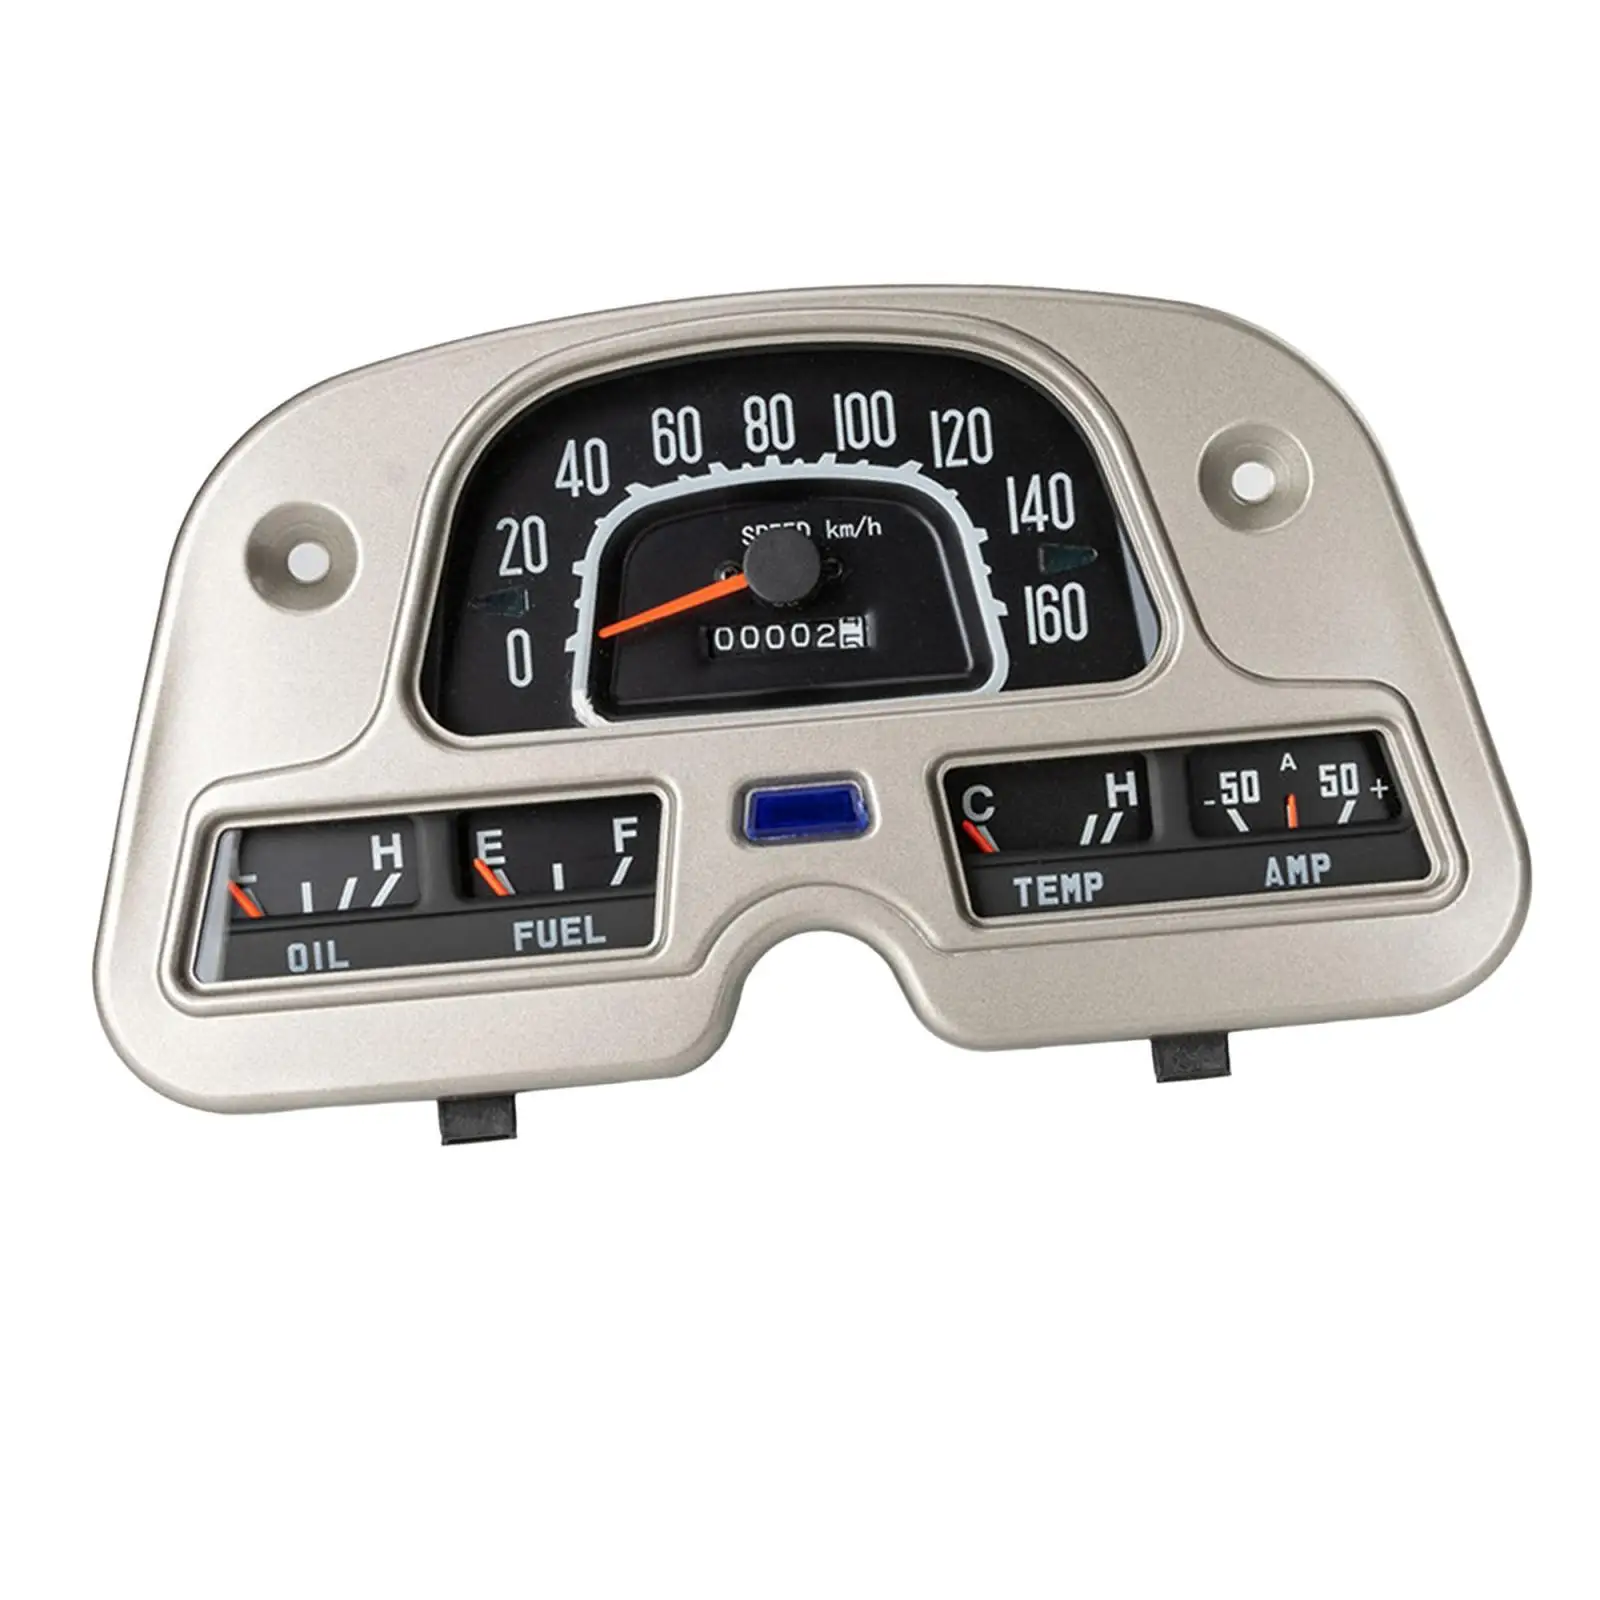 Vehicle Speedometer Gauge 8310060180 Accessories for Toyota for Land Cruiser FJ40 Bj43 Bj42 Hj47 1974-1980